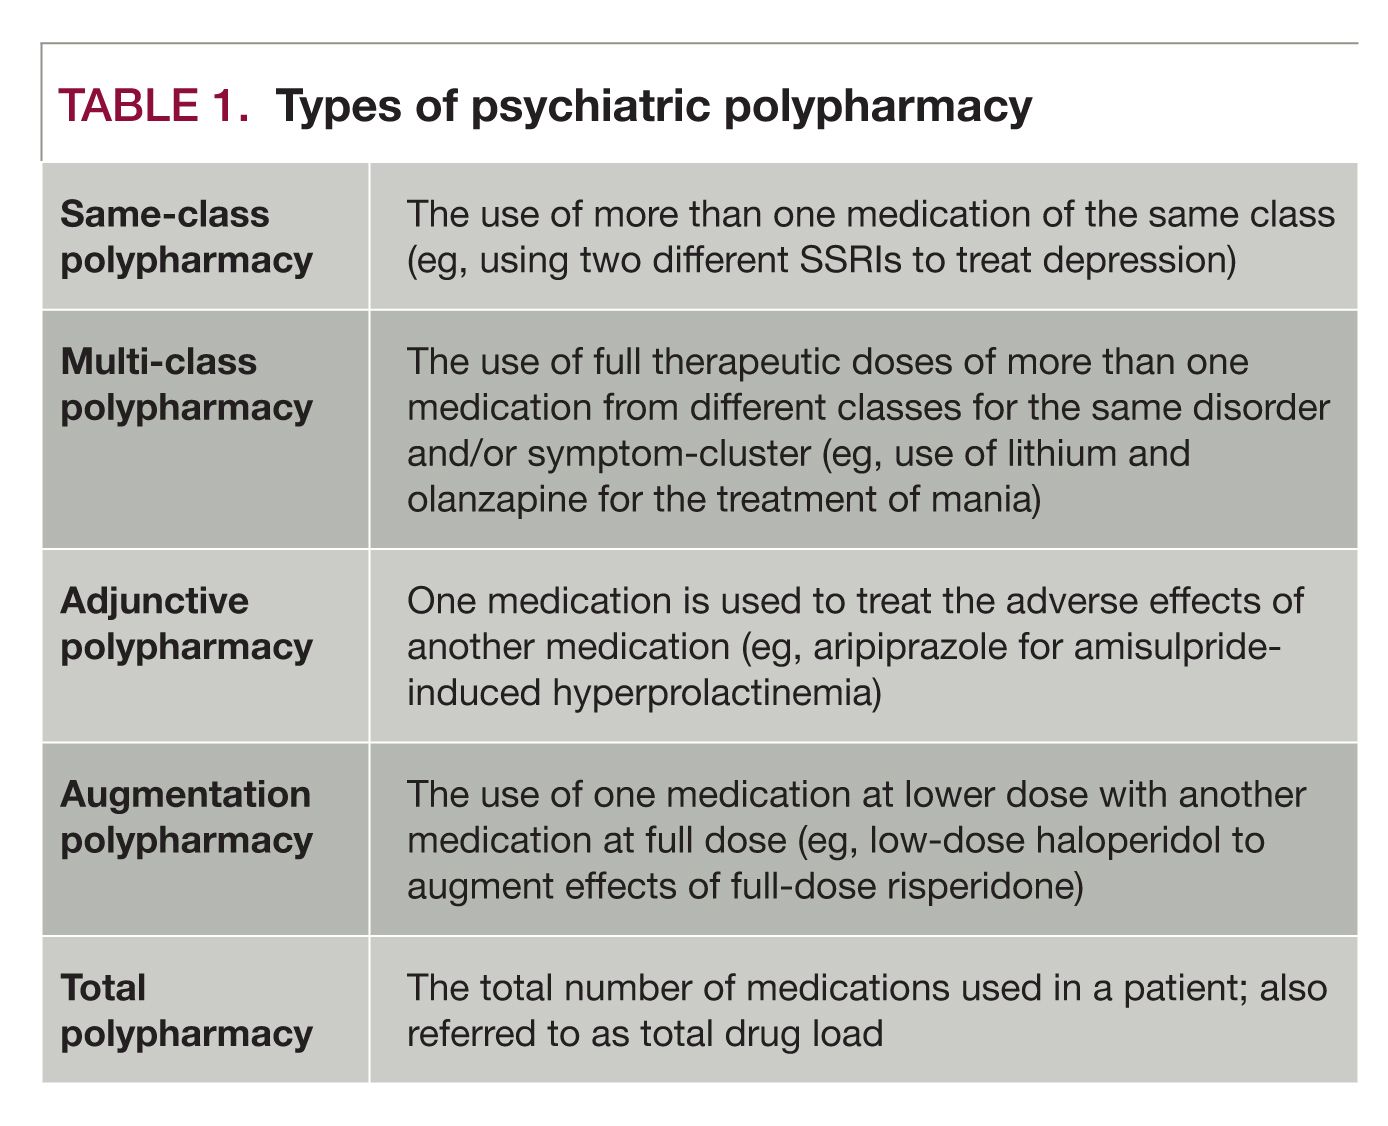 Types of psychiatric polypharmacy